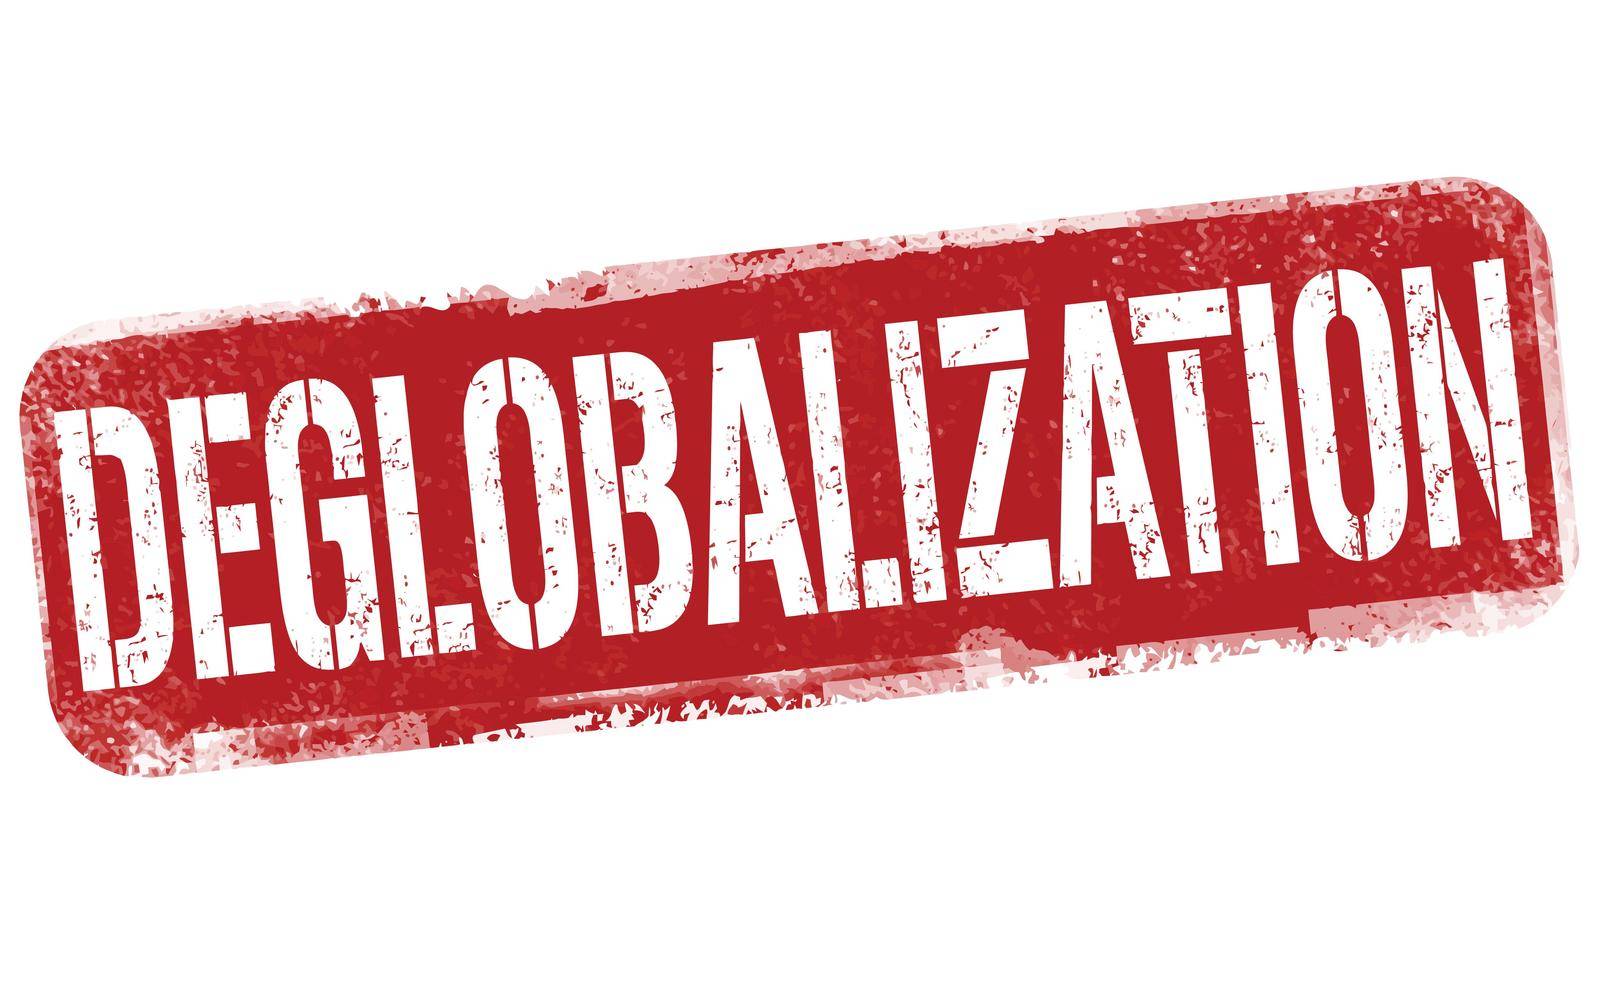 Deglobalization grunge rubber stamp on white background, vector illustration